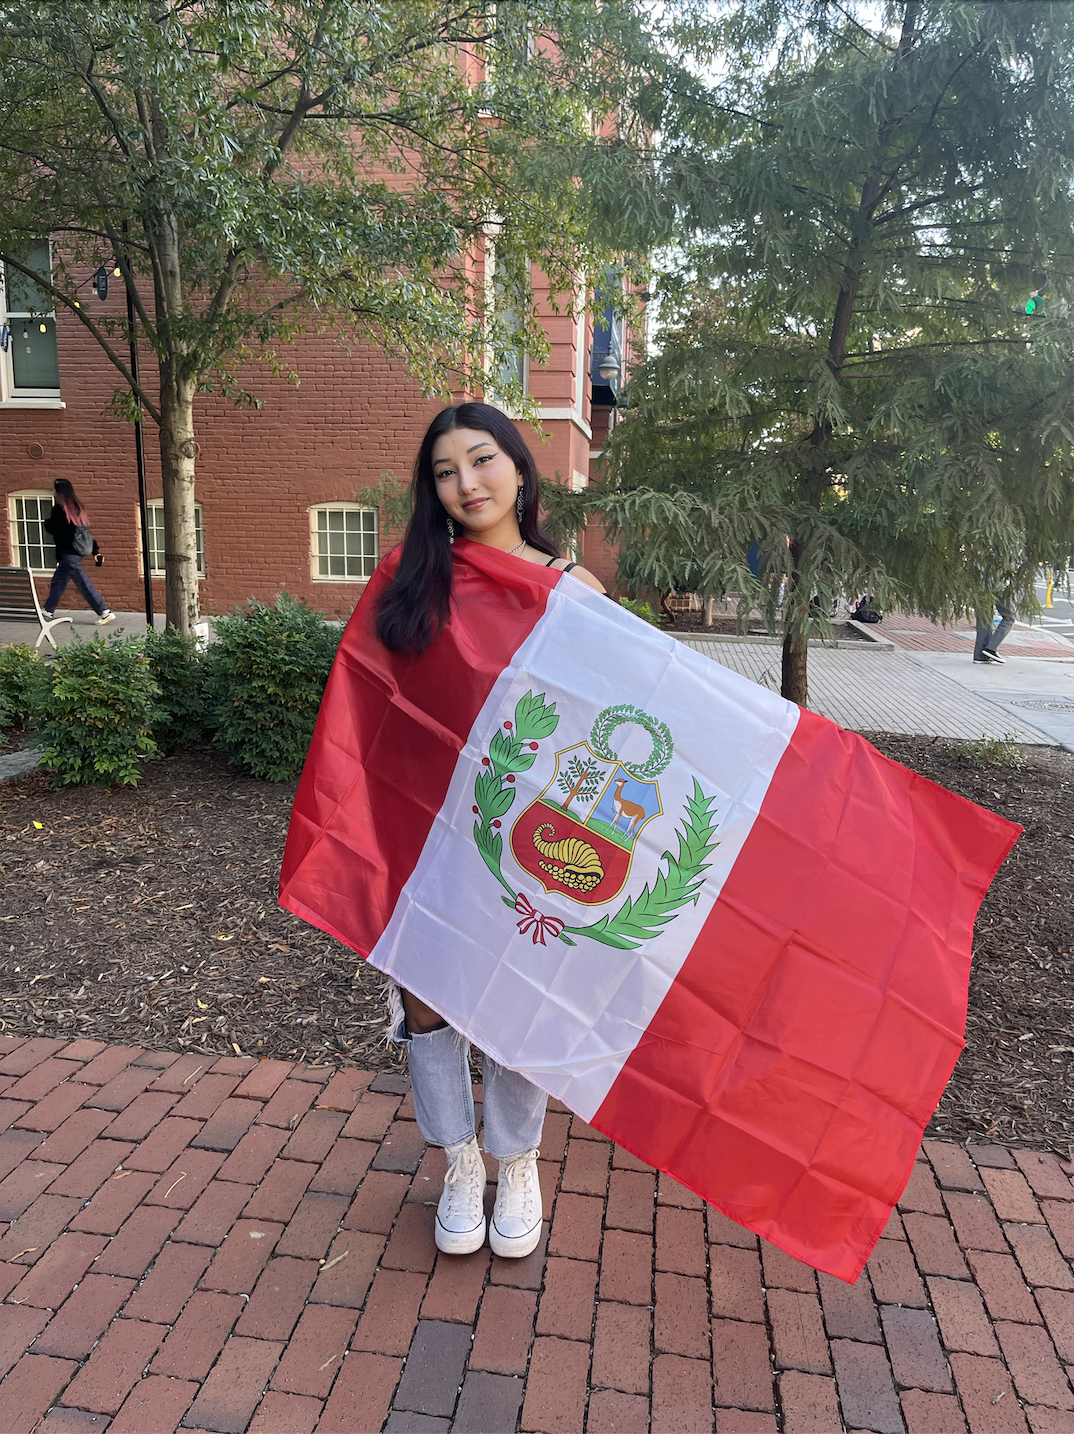 Nicole holding the Peruvian flag